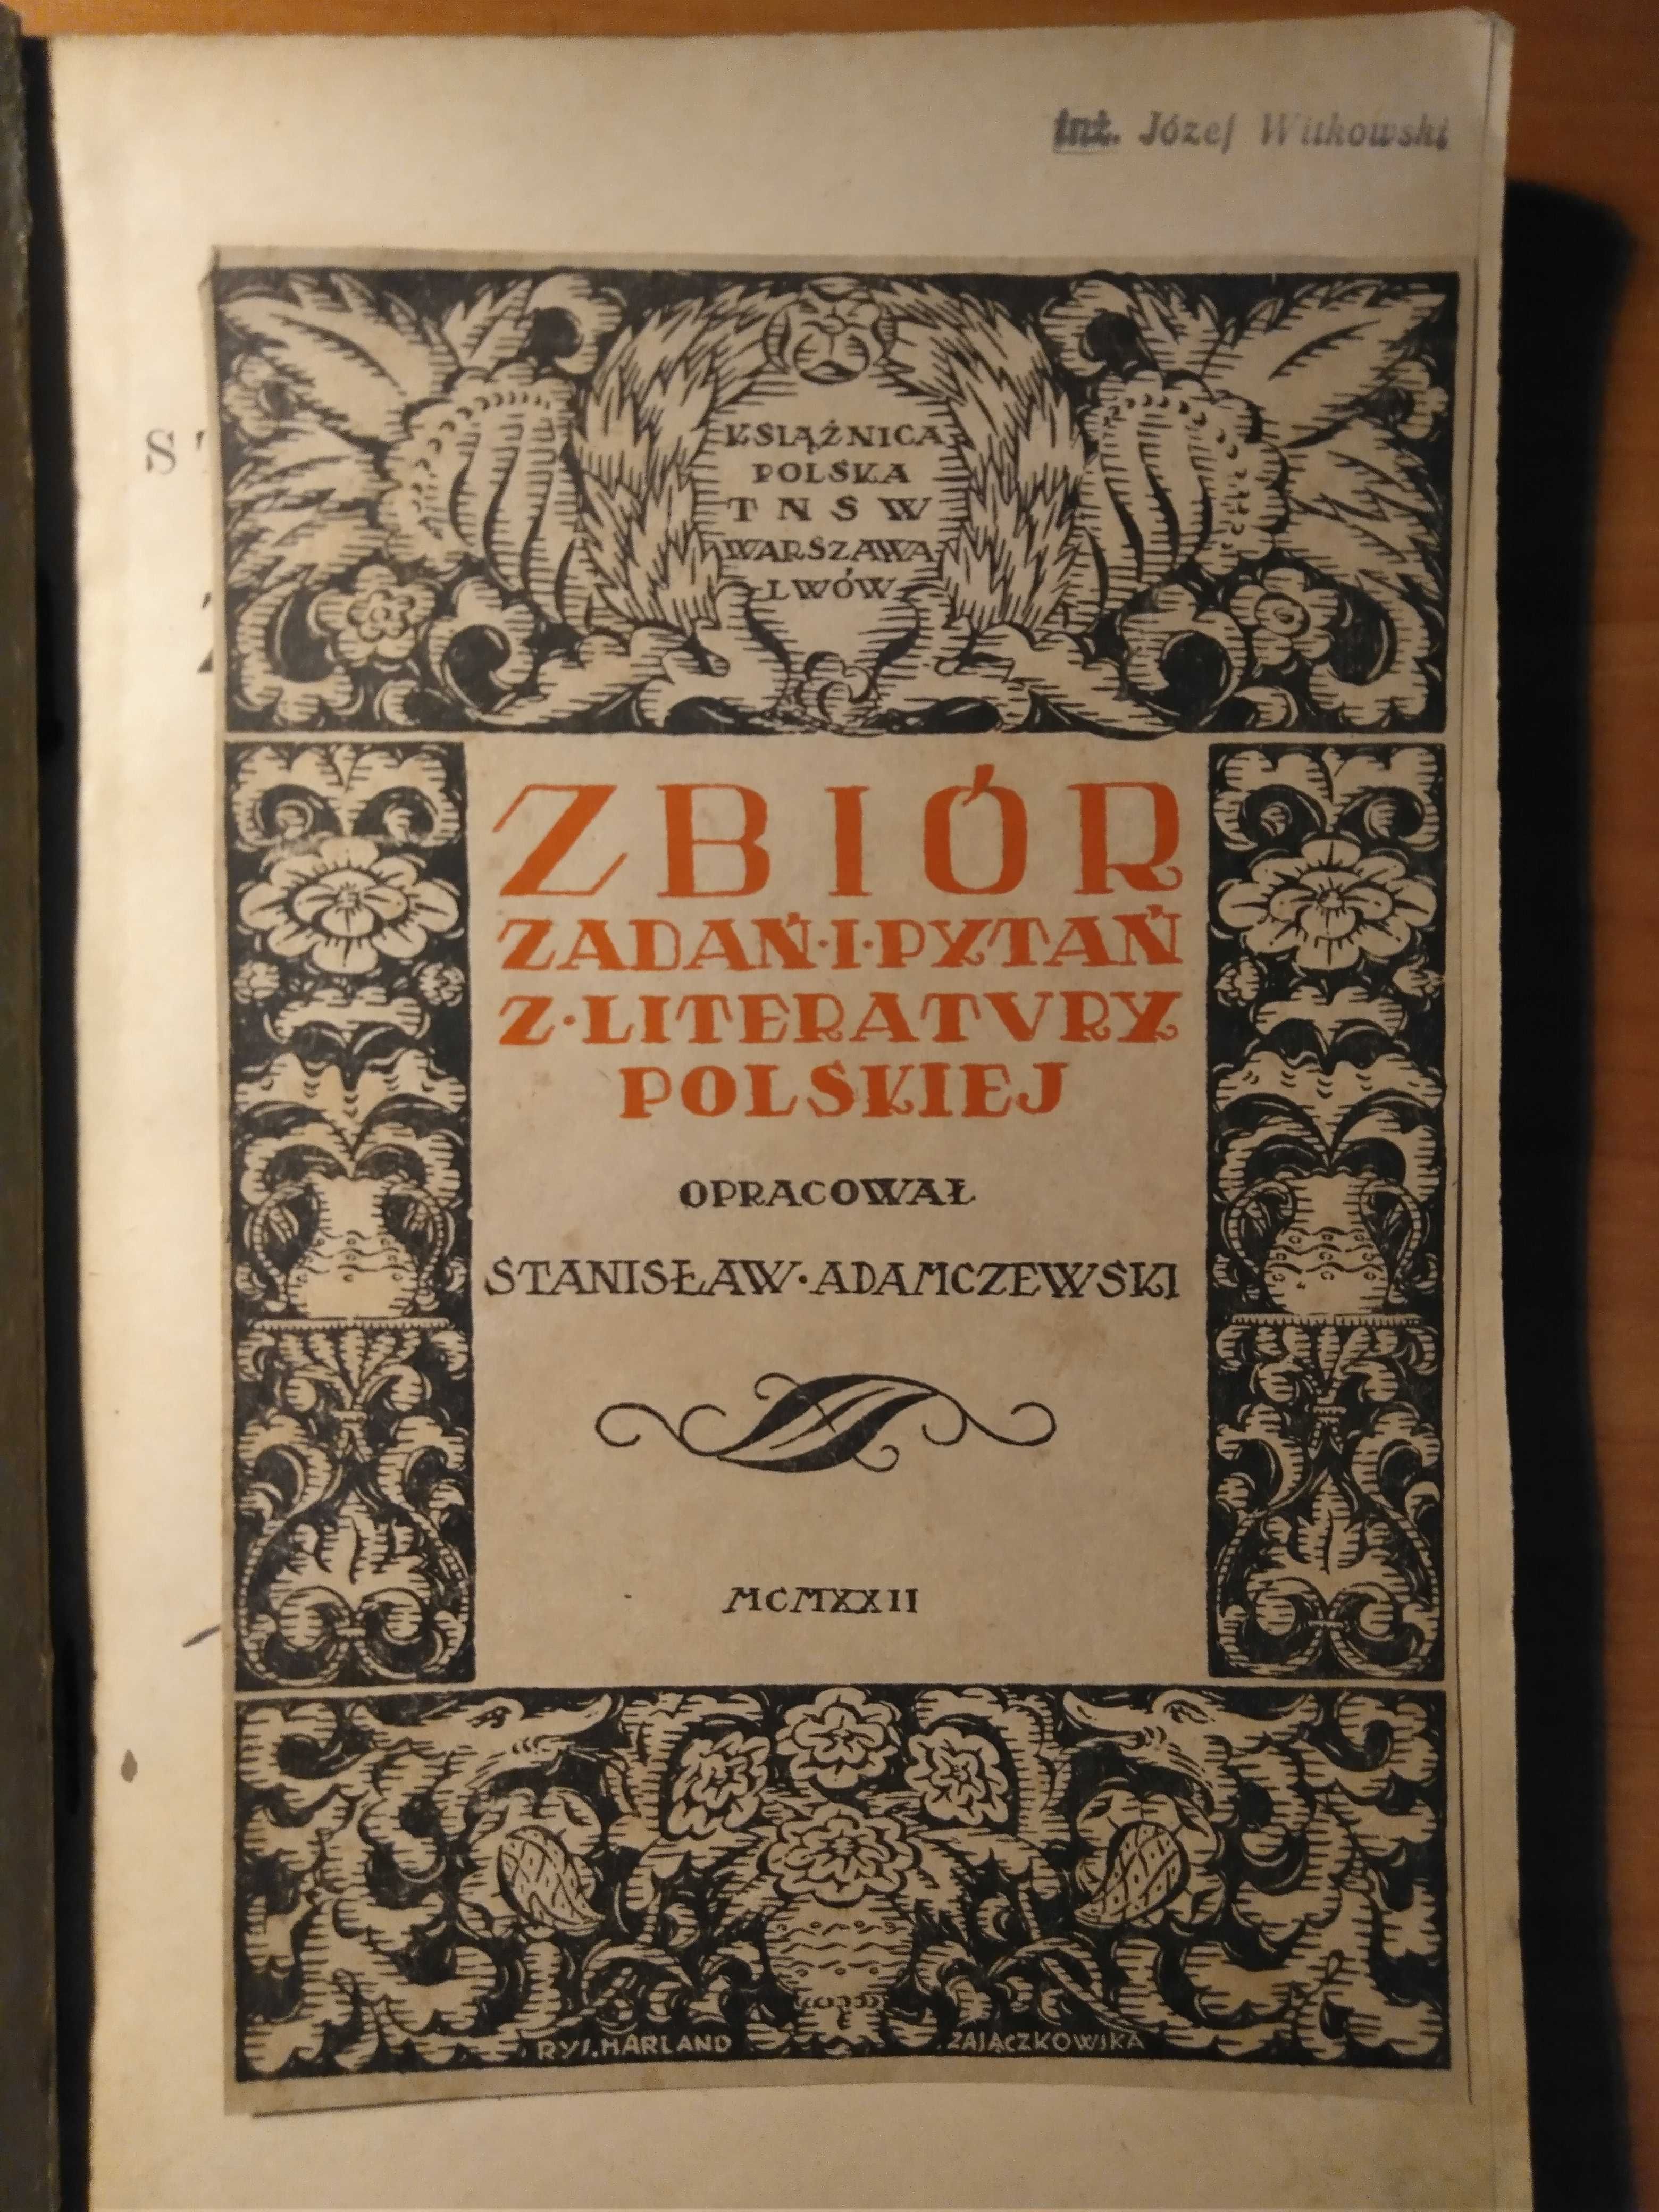 Zbiór zadań i pytań z literatury polskiej - 1922